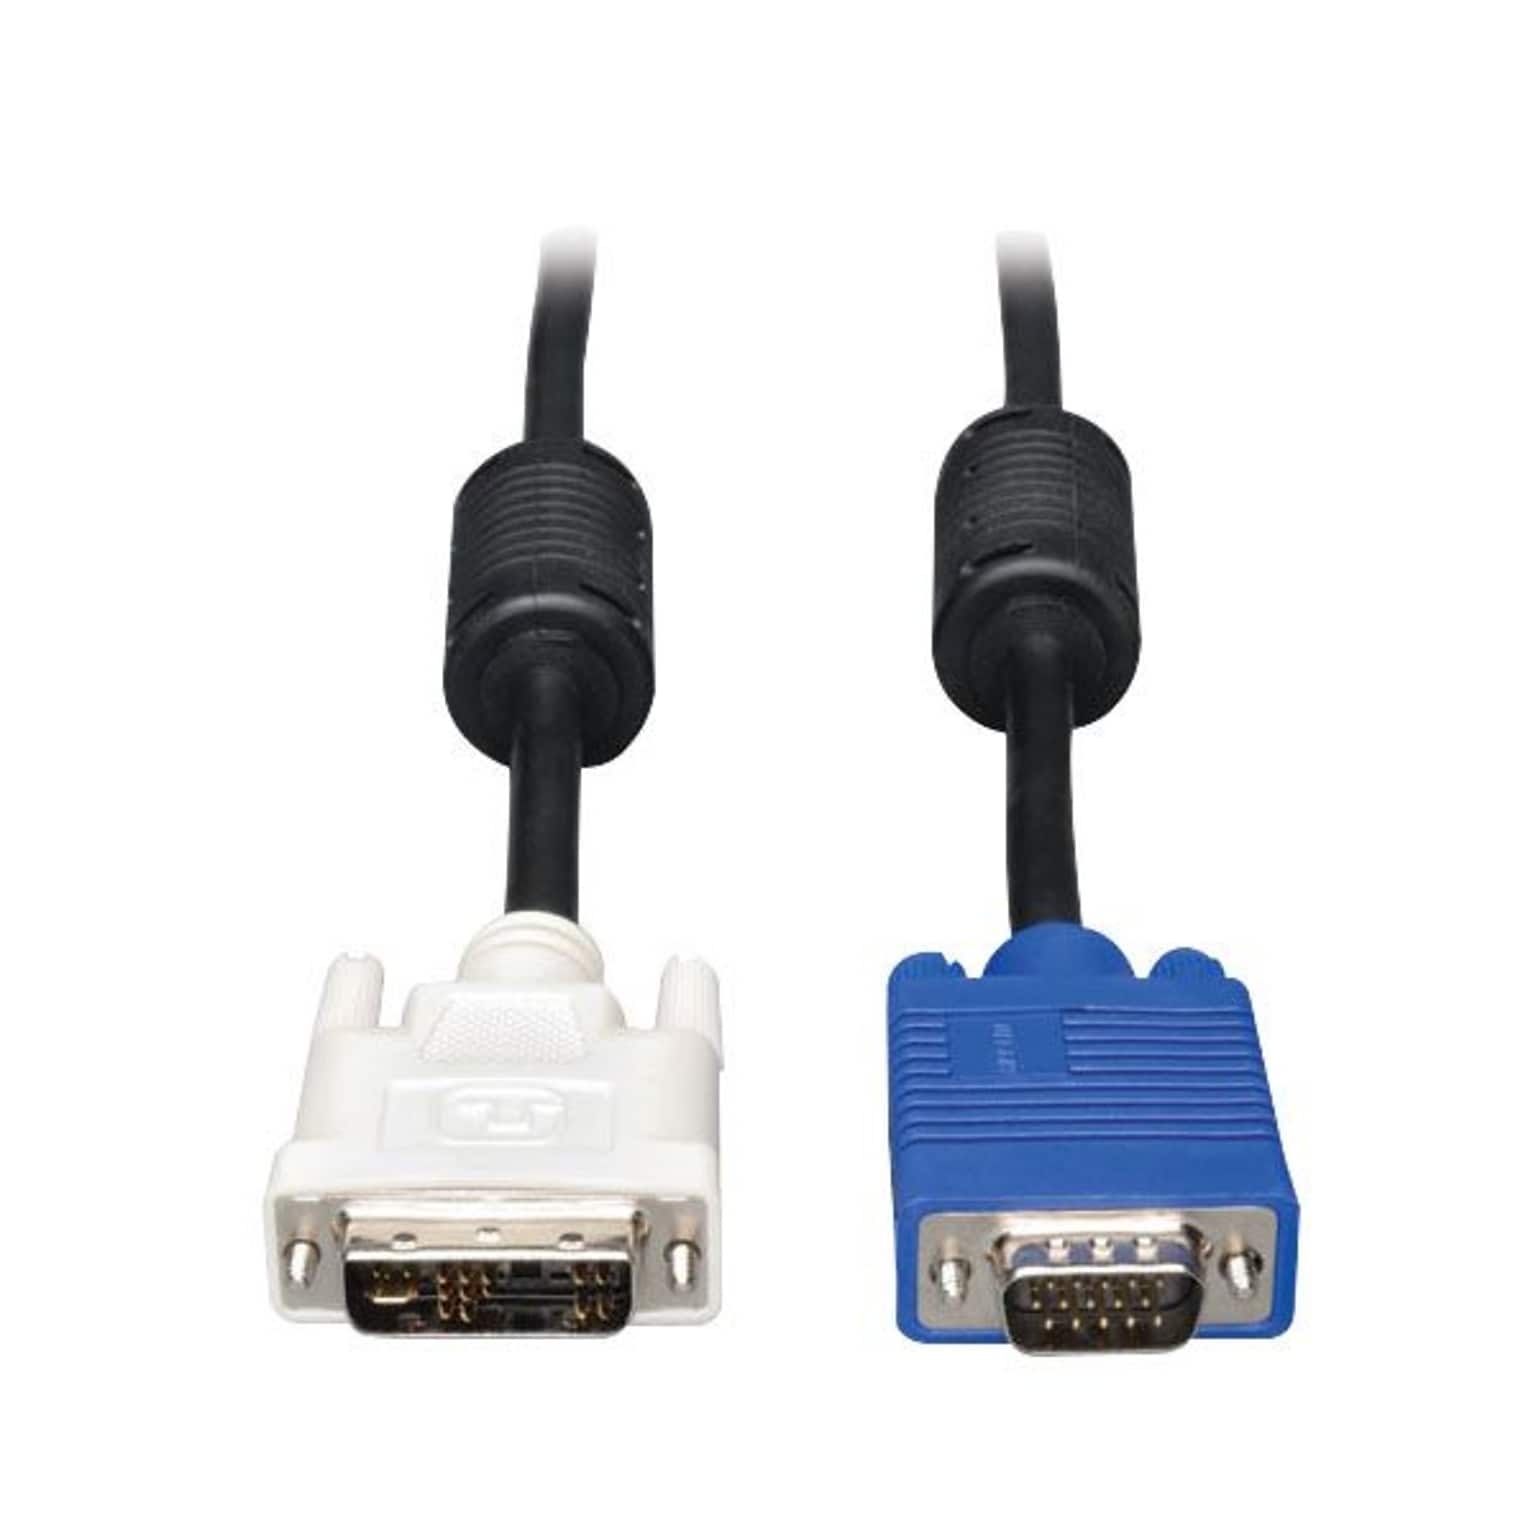 Tripp Lite 6 DVI-A Male to HD-15 Male VGA Cable; Black